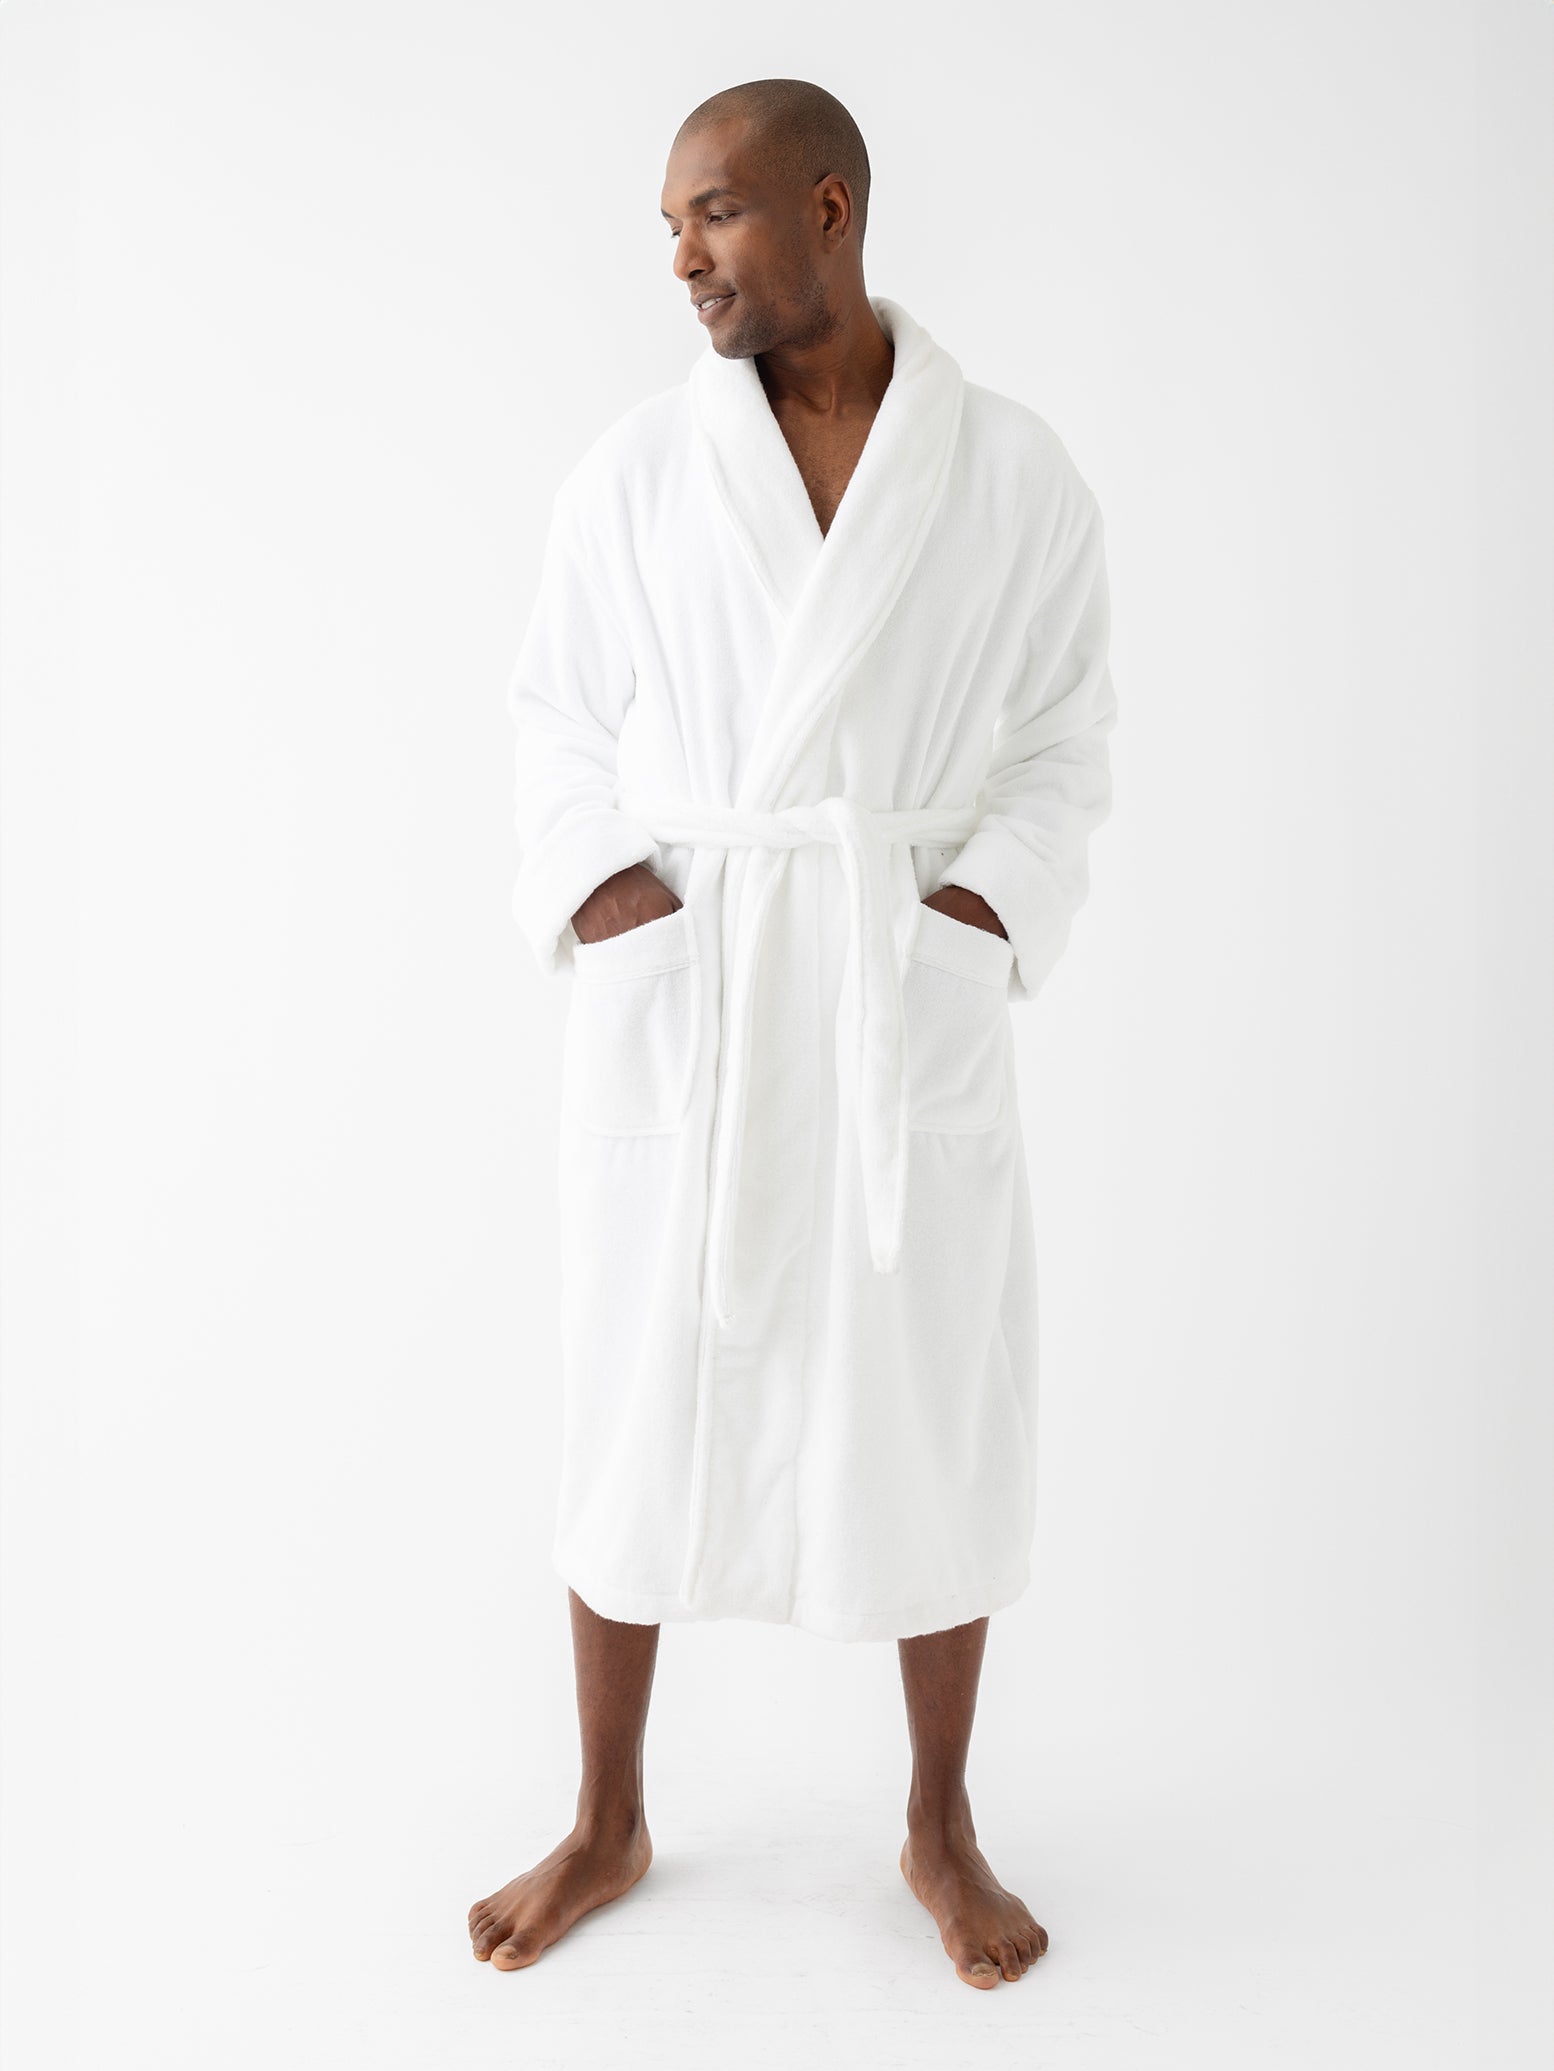 Man in white bath robe with white background 